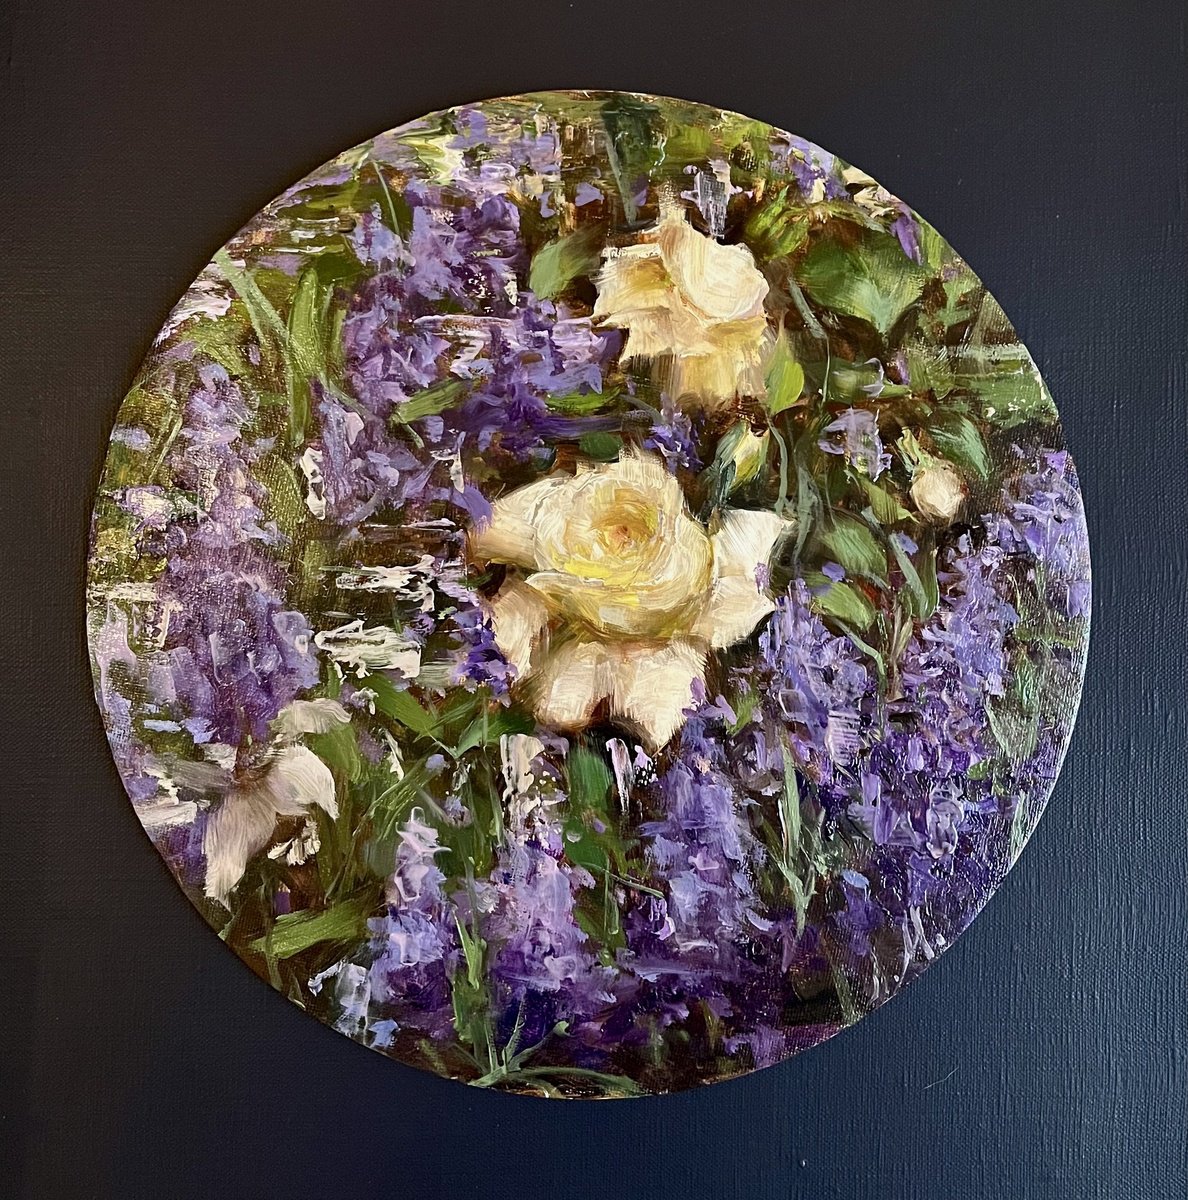 Roses and lavender 1 by Elena Mashajeva-Agraphiotis